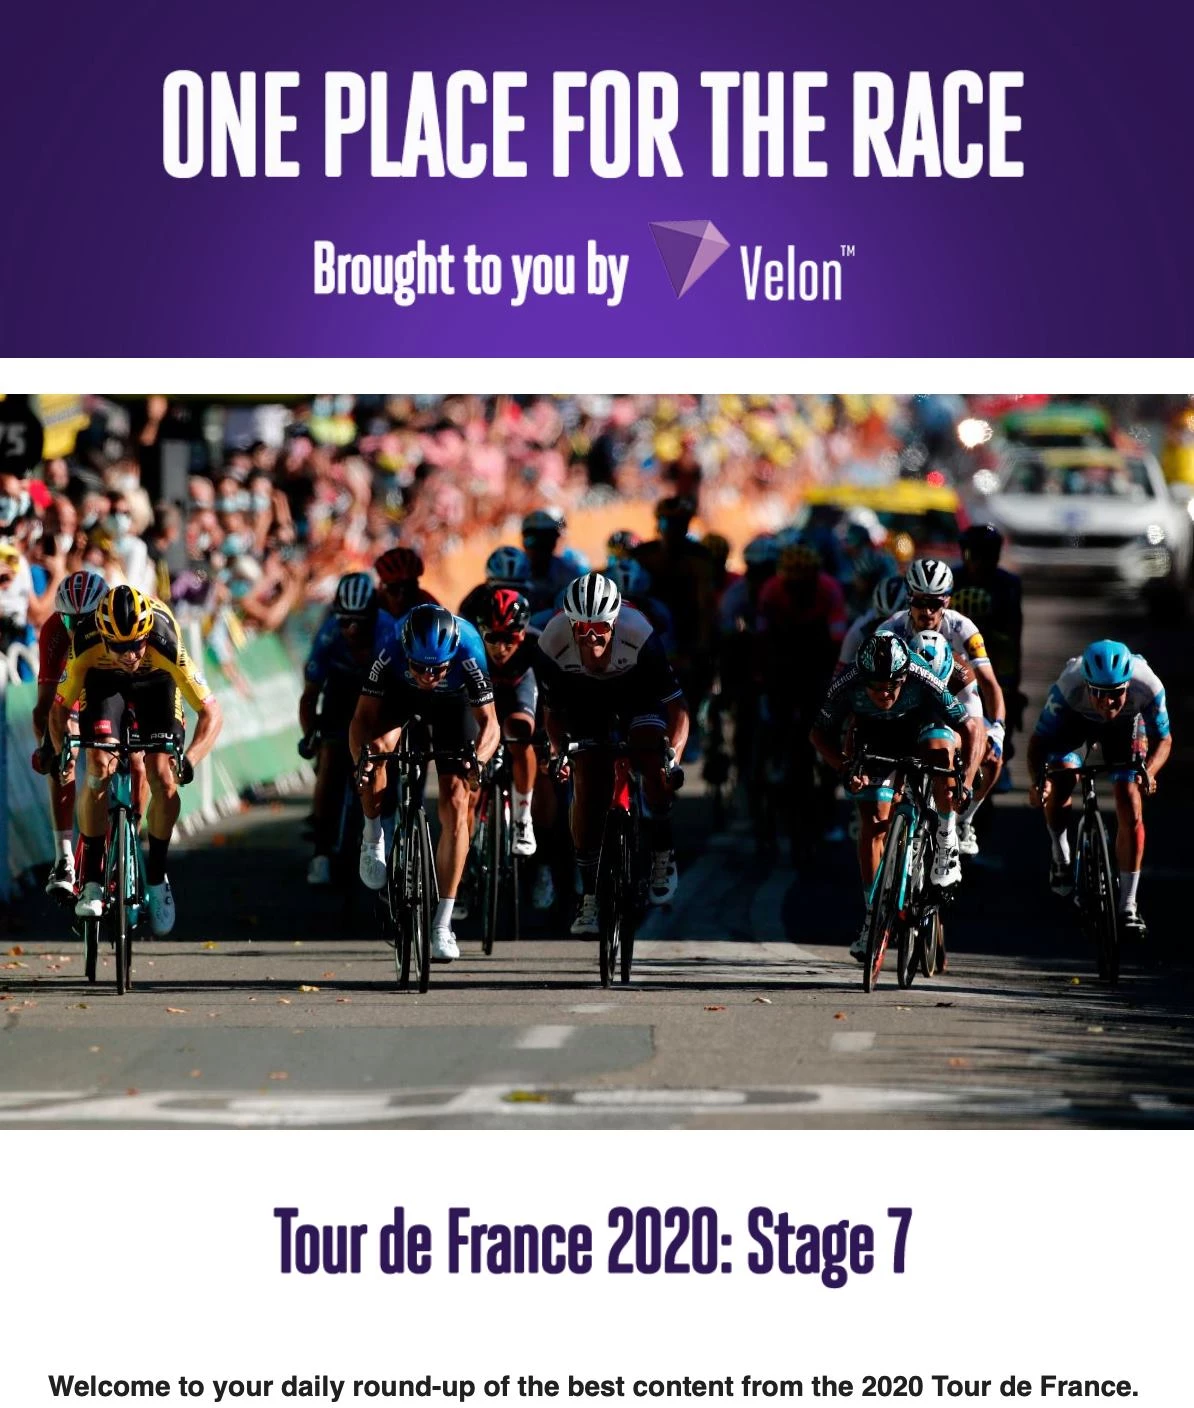 Tour de France email newsletter example from Team Jumbo-Visma